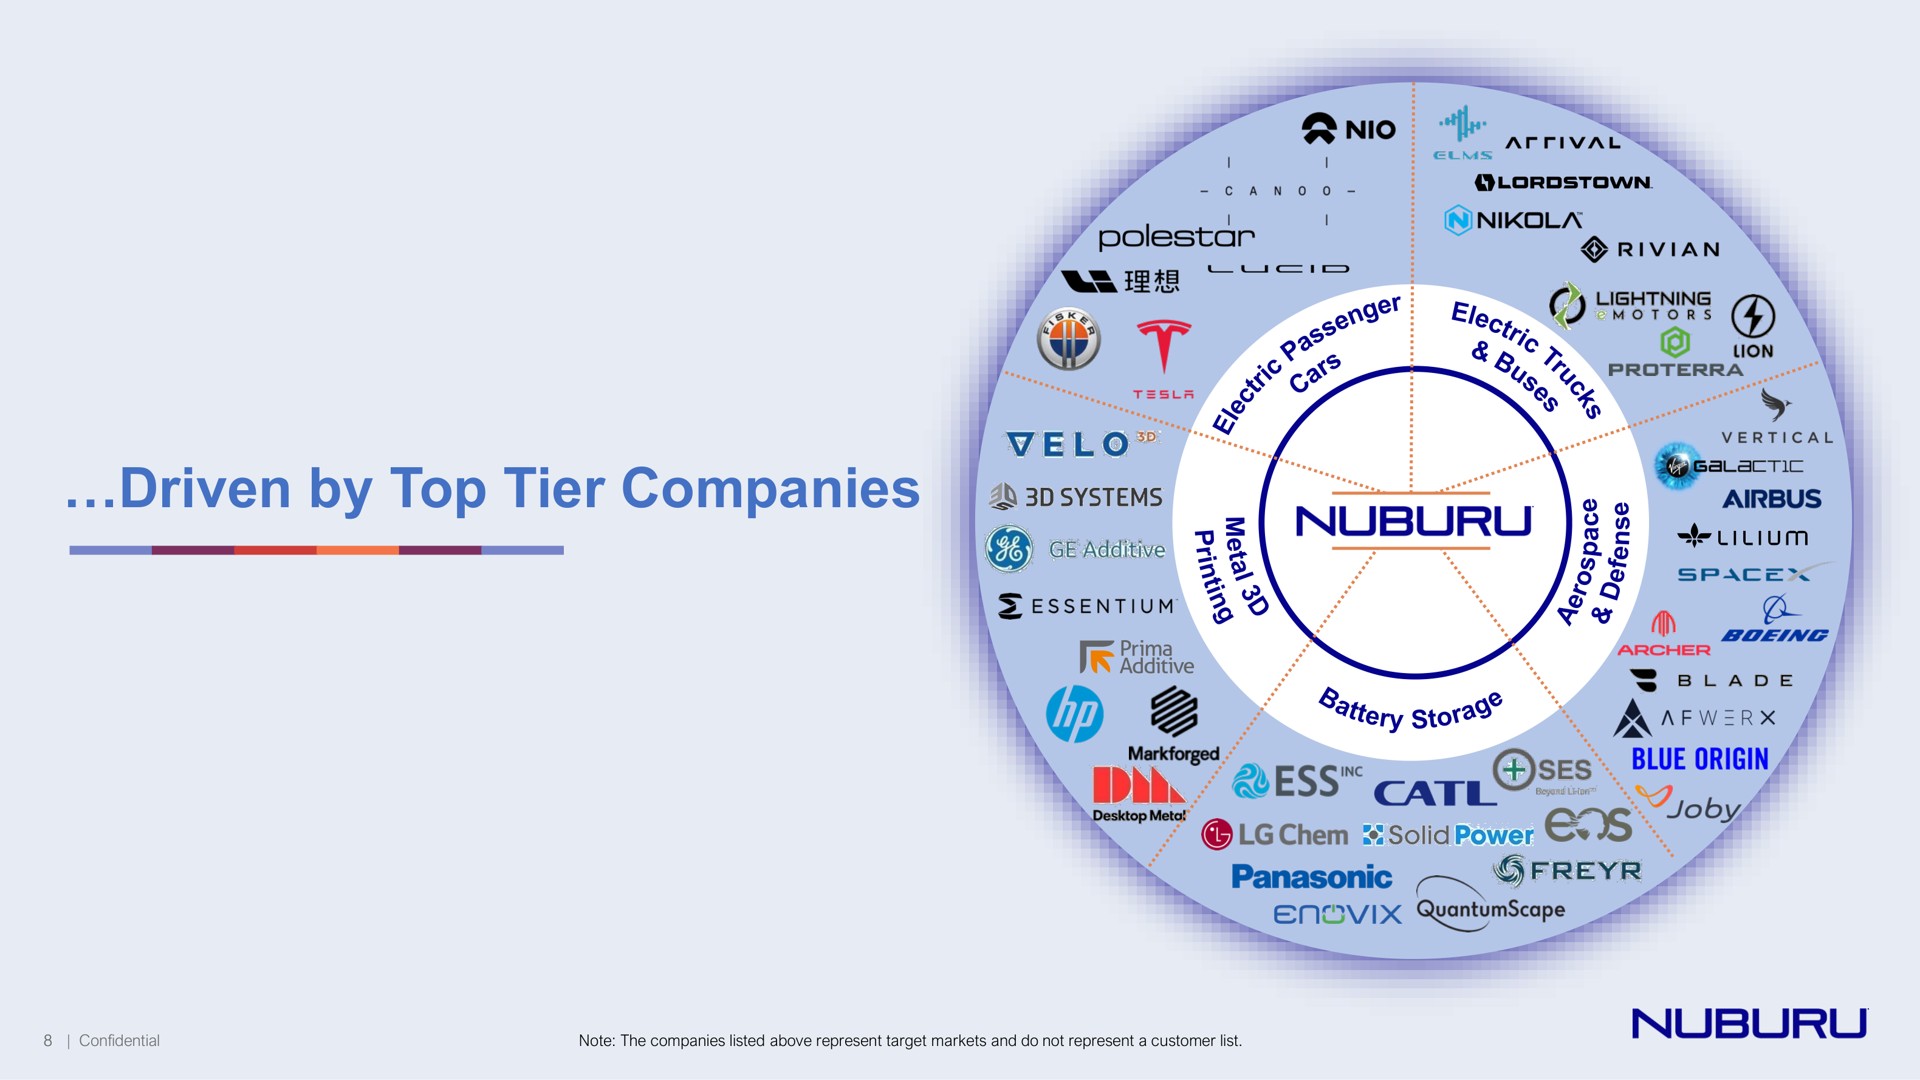 driven by top tier companies a oer on a soe a on ess cos a | NUBURU